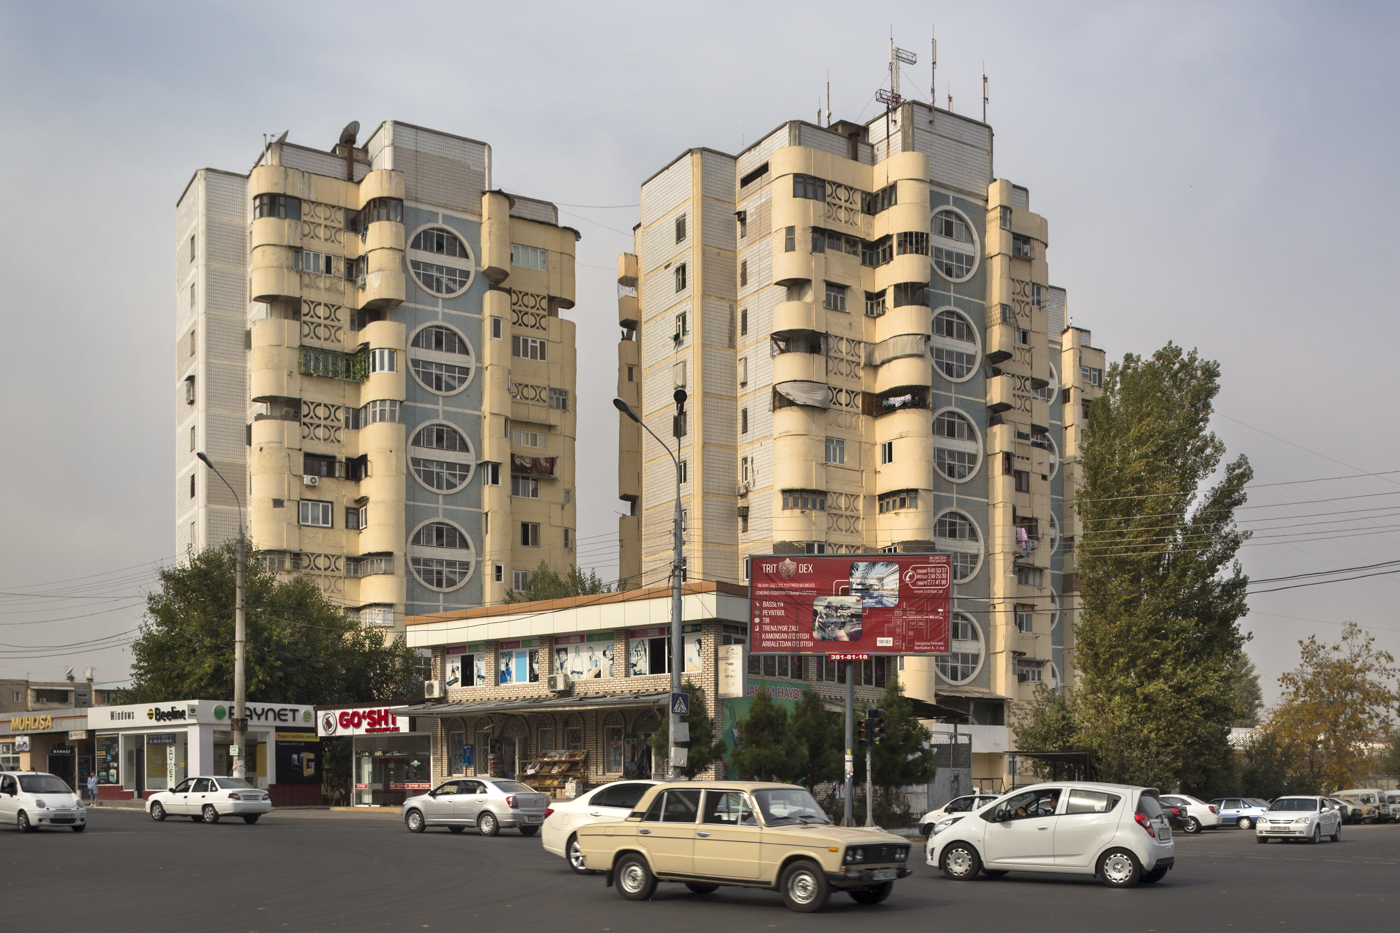 Residential buildings (1980s). Tashkent, Uzbekistan. Photo: Roberto Conte